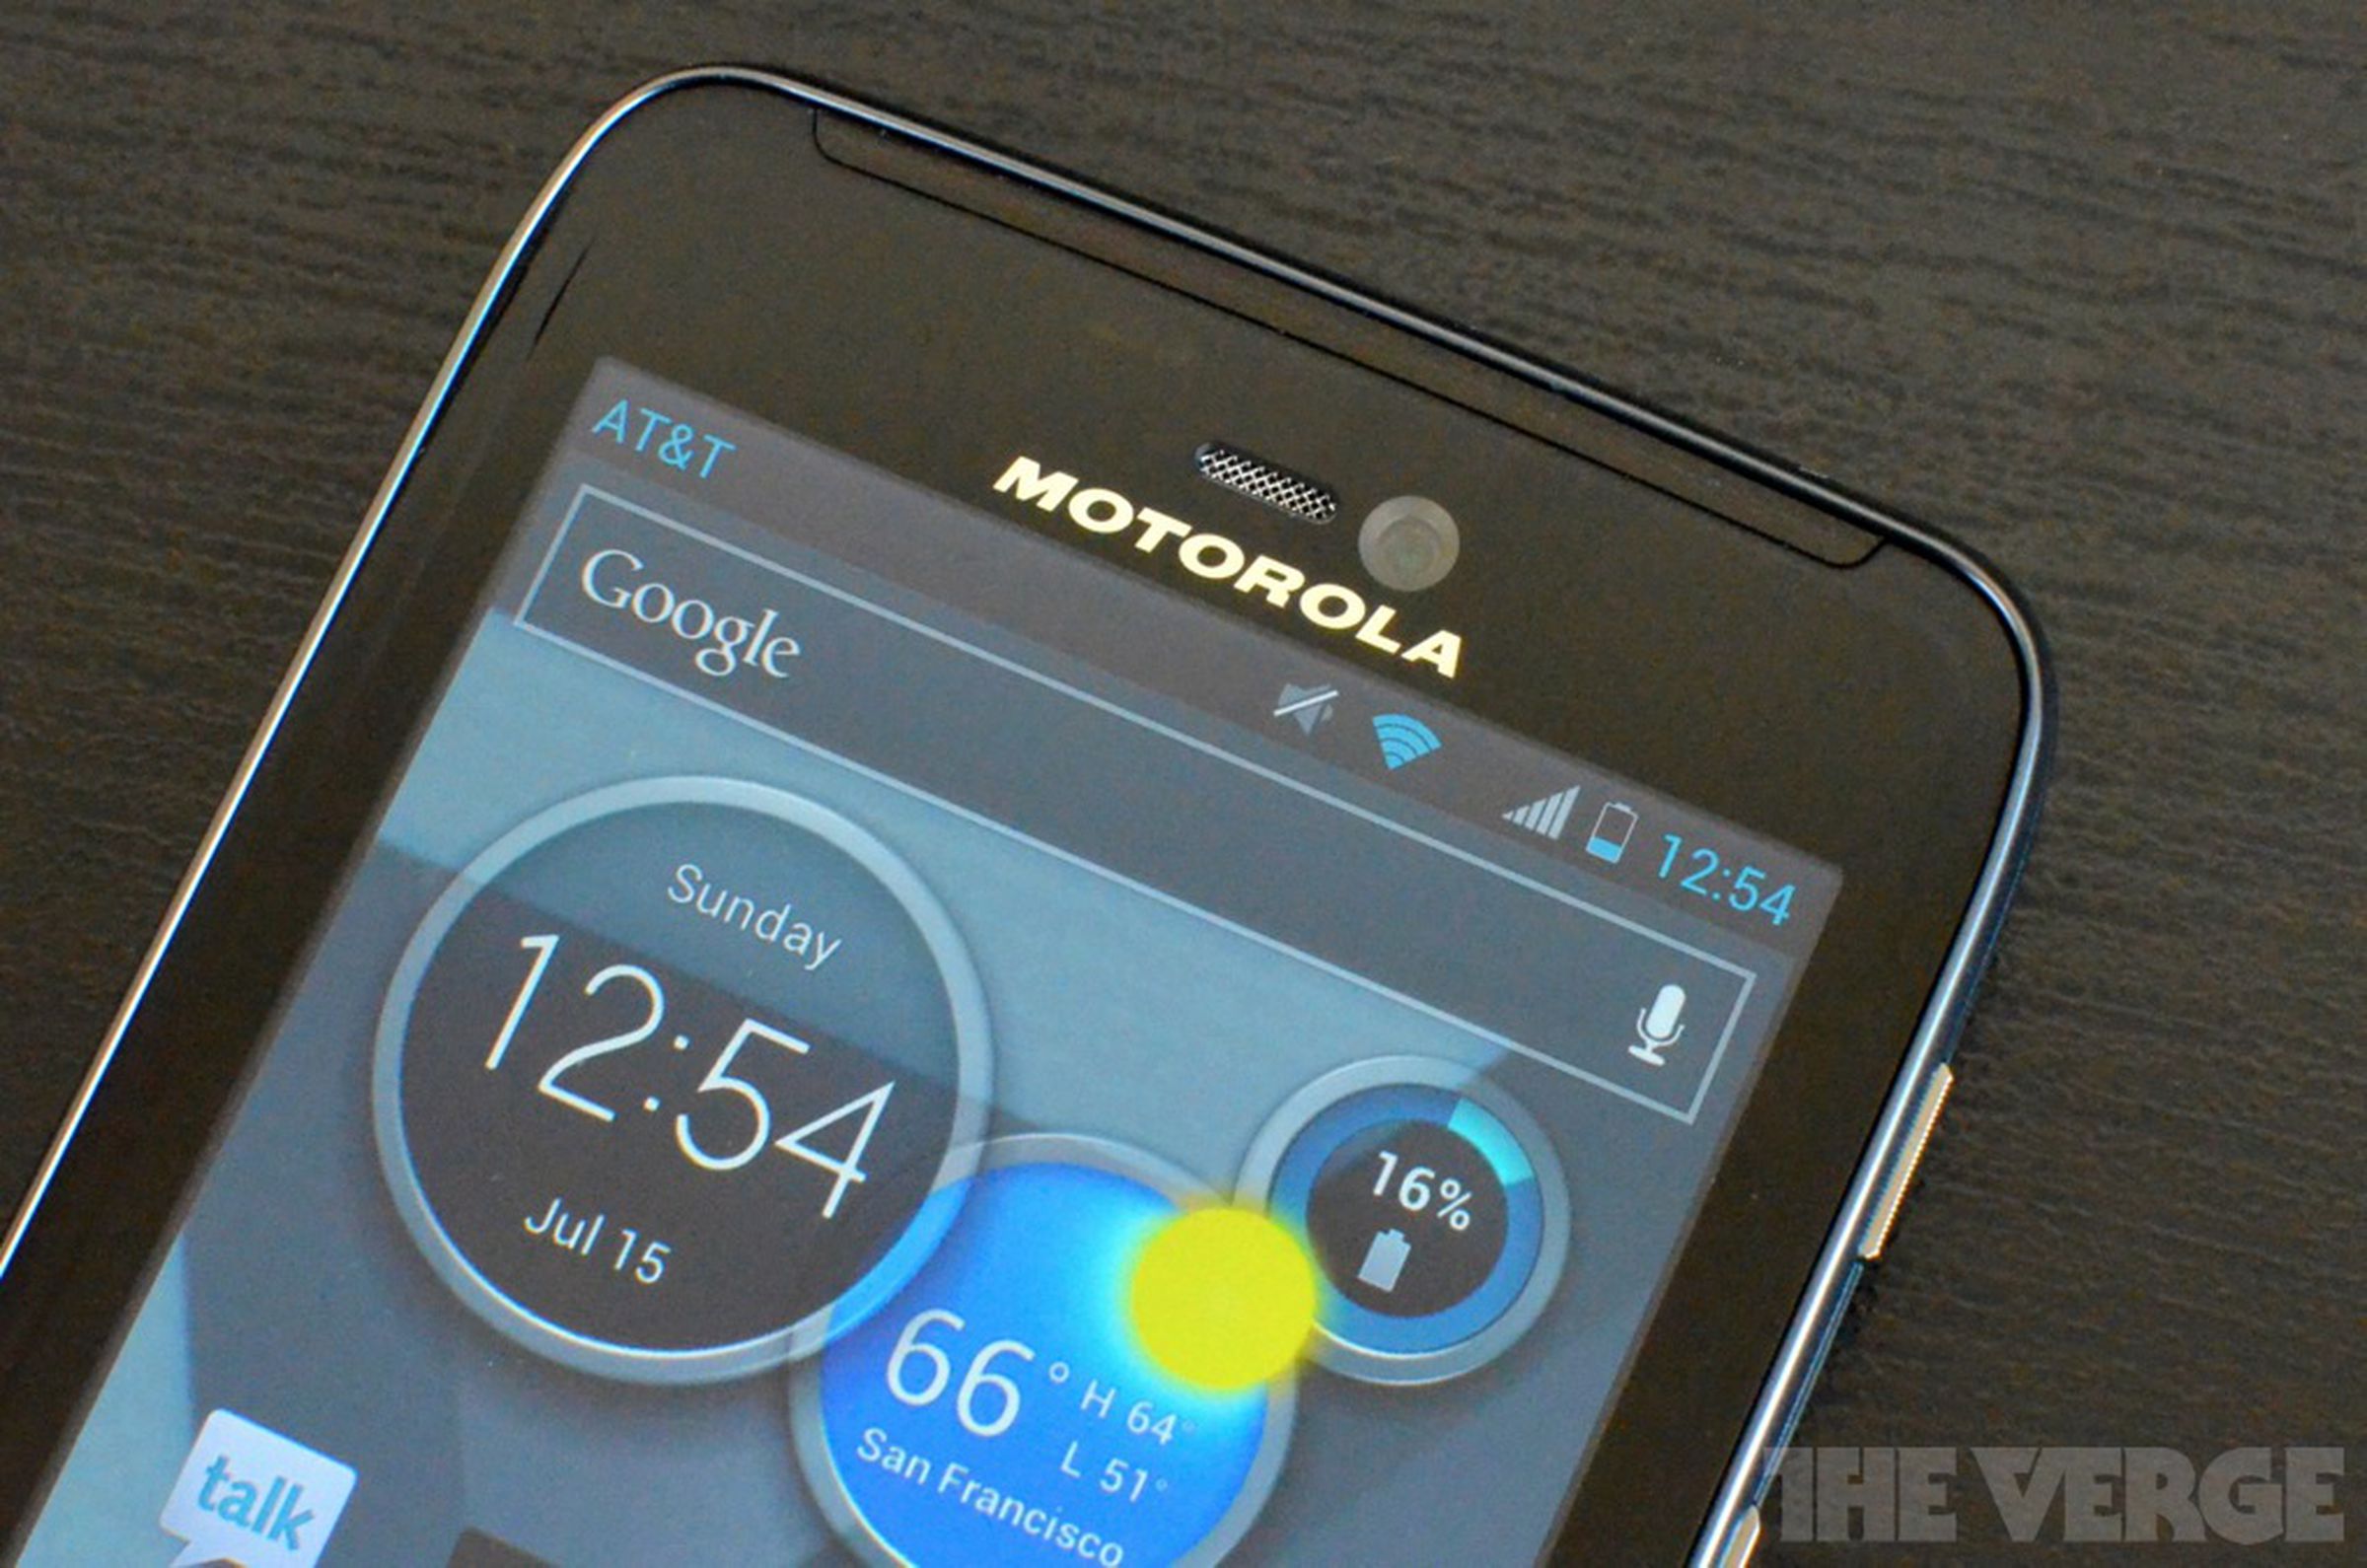 Motorola Atrix HD pictures